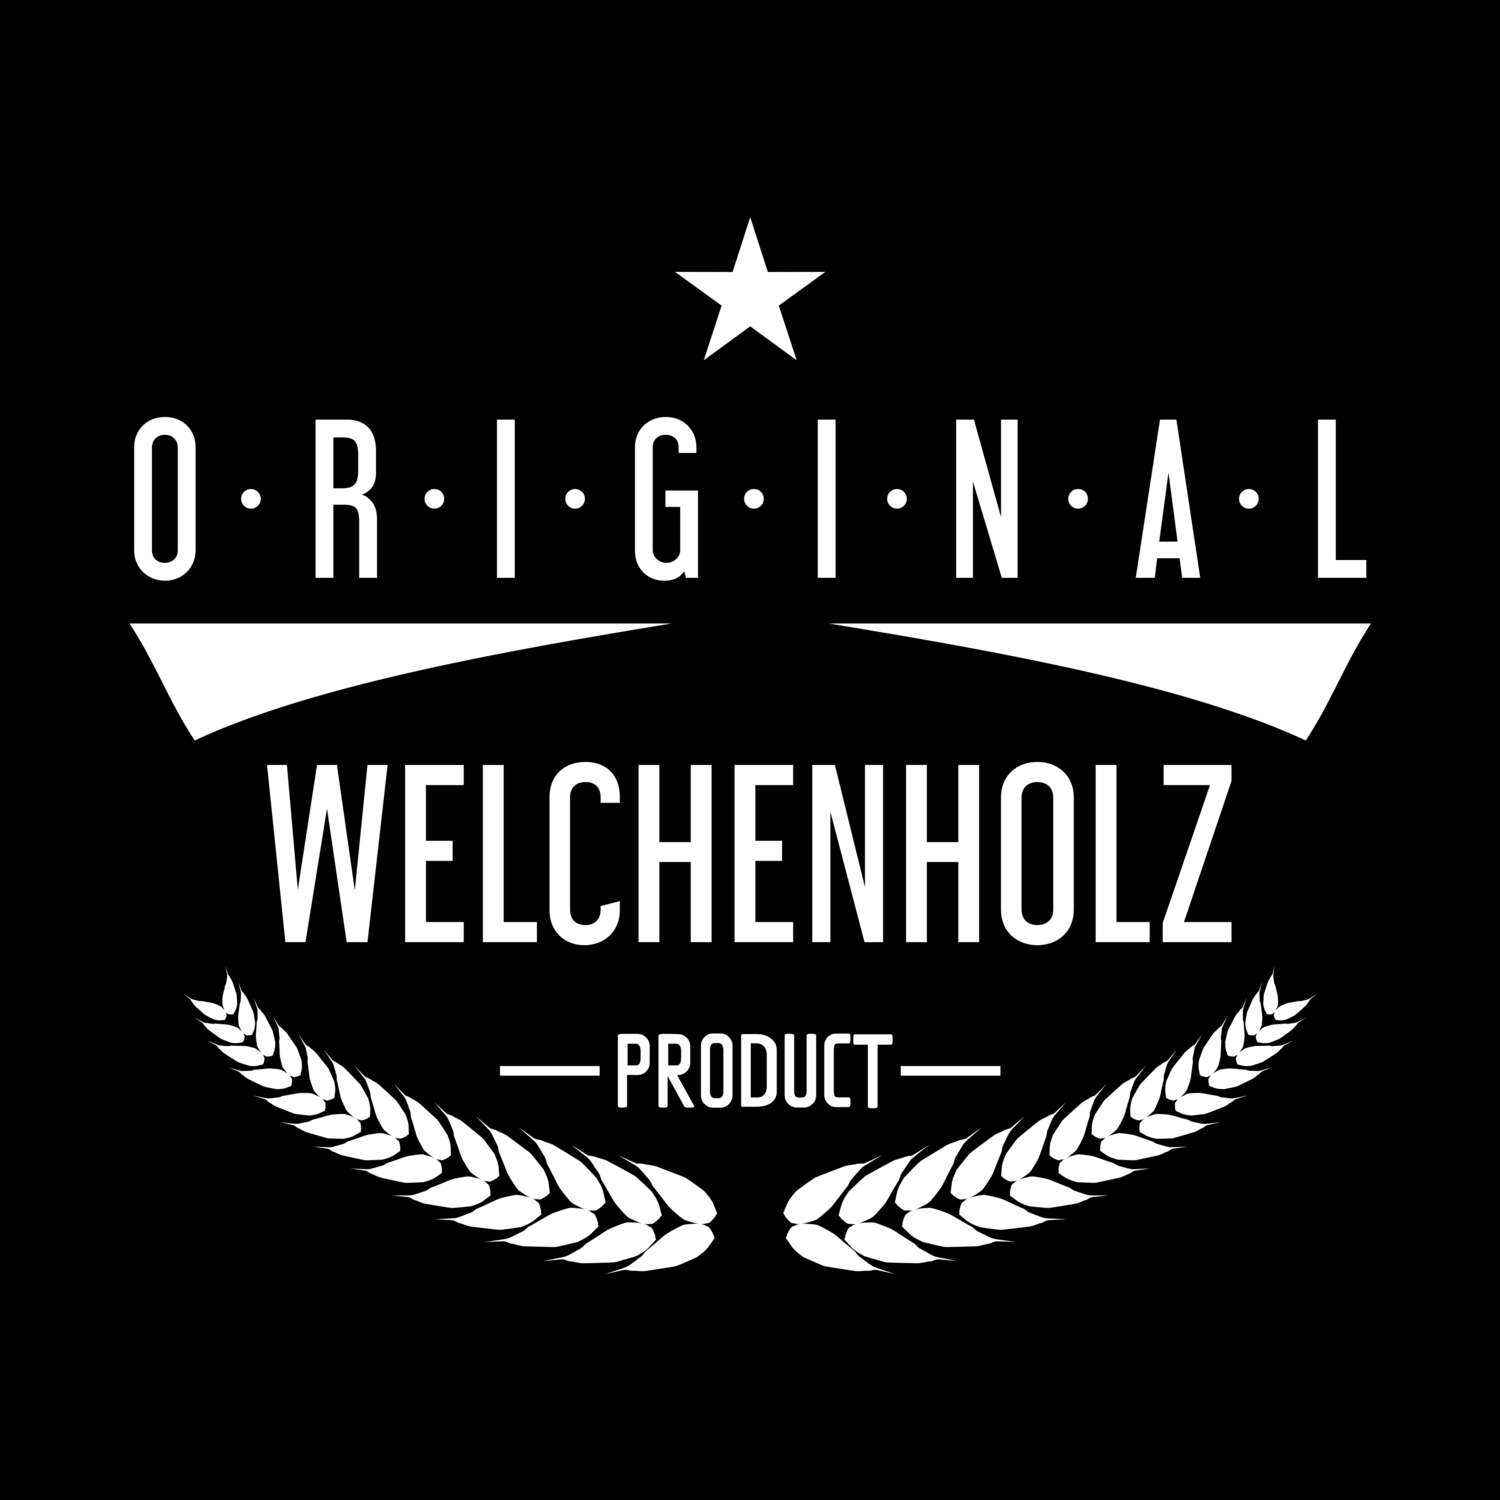 Welchenholz T-Shirt »Original Product«